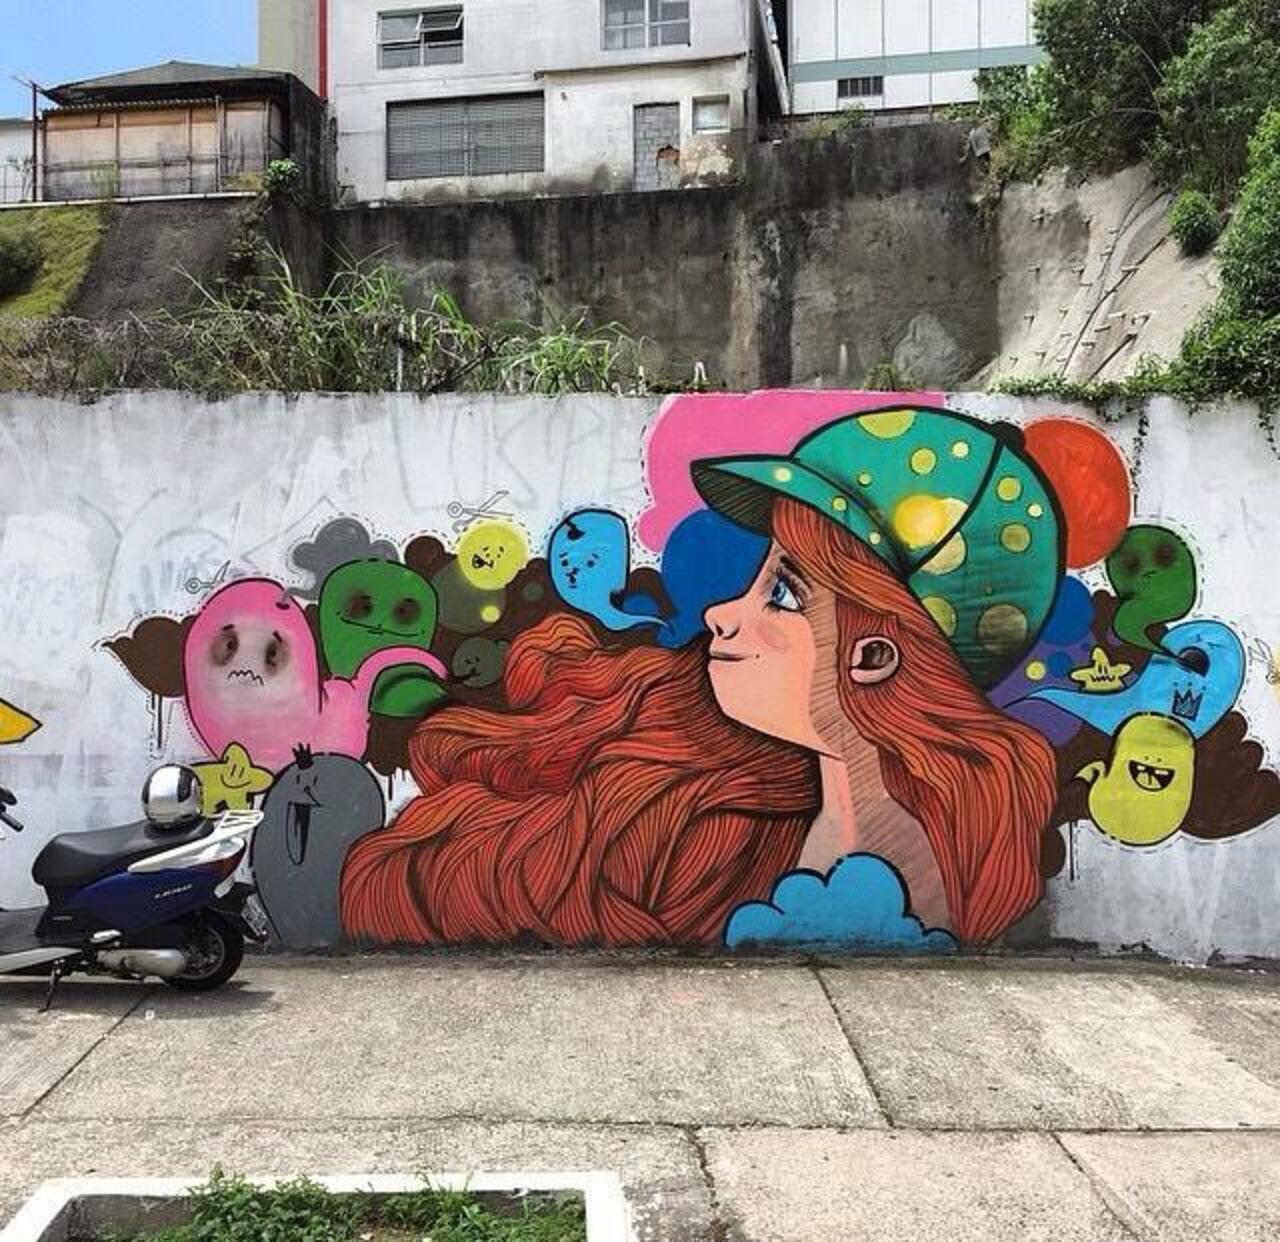 Endearing Street Art by Vupulos in São Paulo, Brazil 

#art #mural #graffiti #streetart http://t.co/KL0PSMpcKe